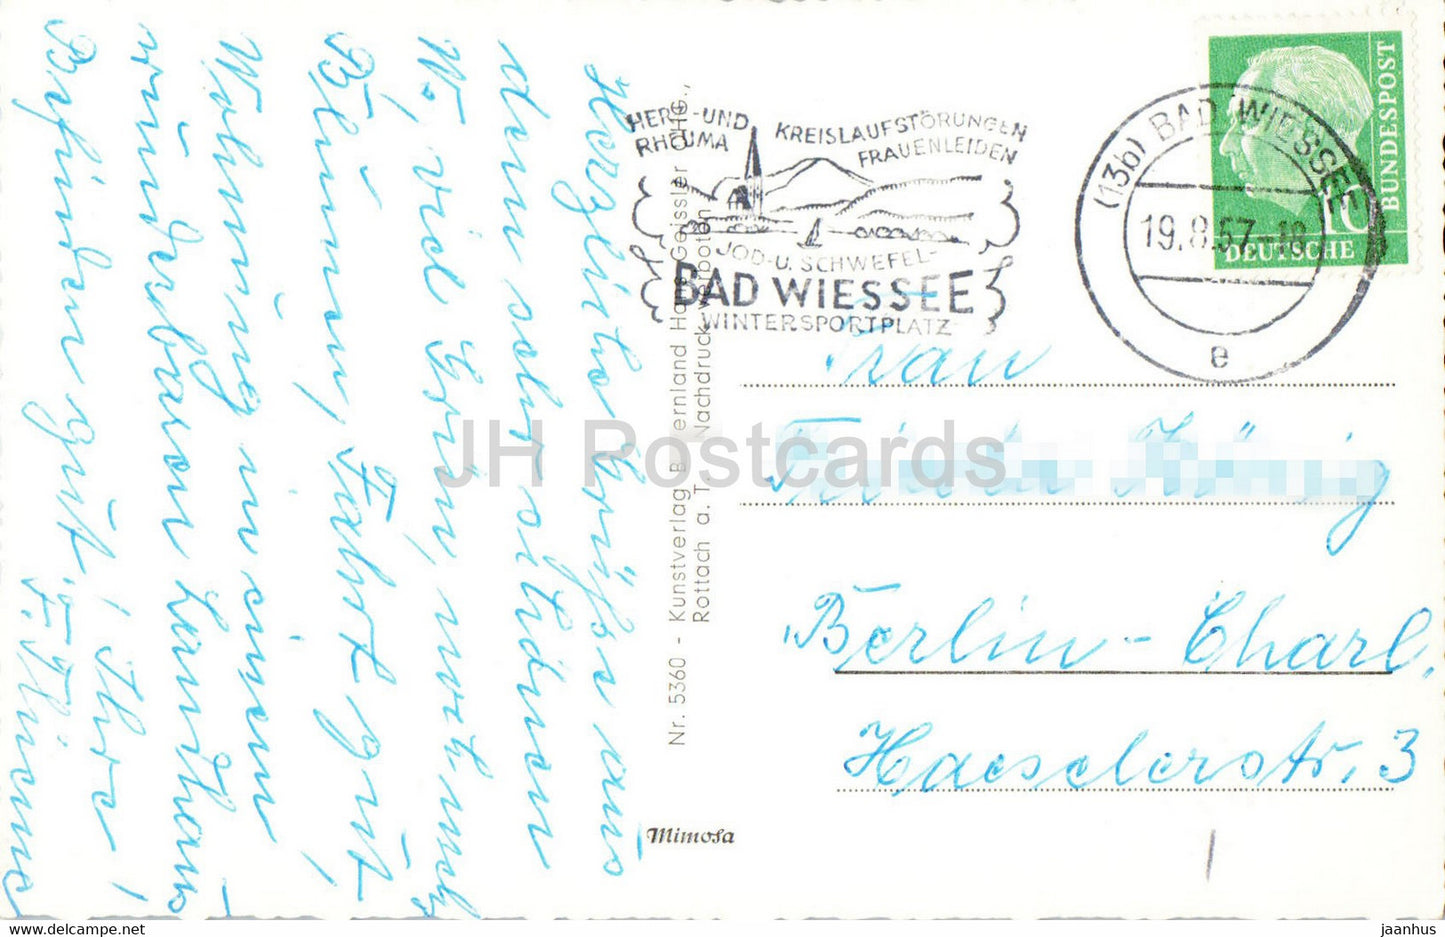 Bad Wiessee - Kurpark - Brunnenbuberl - carte postale ancienne - 1957 - Allemagne - utilisé